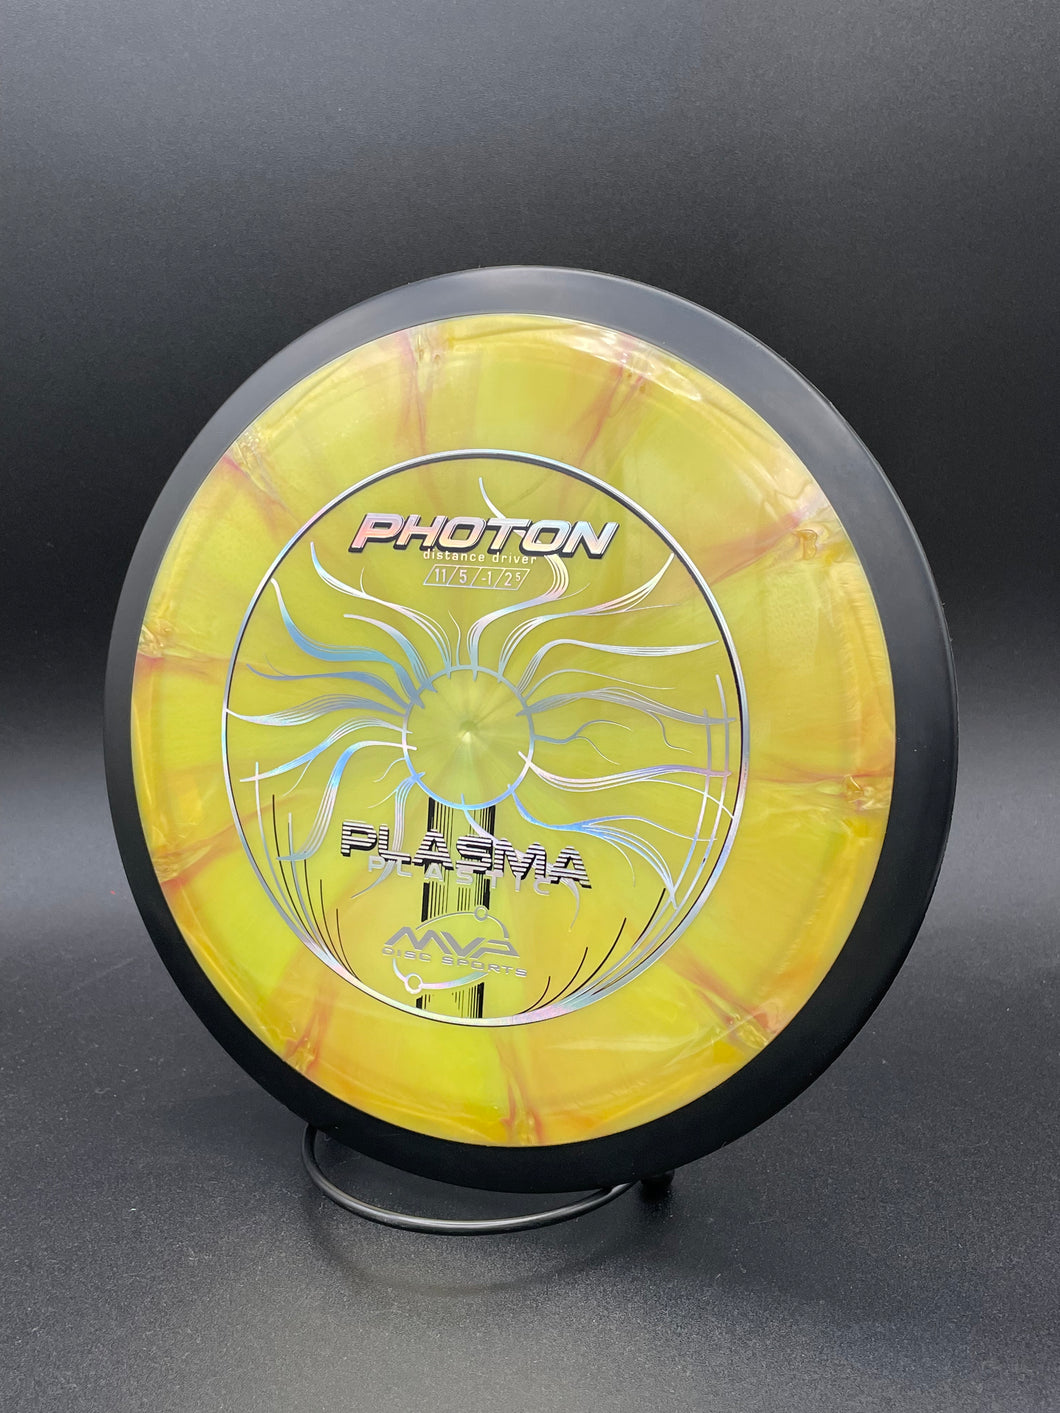 Photon / MVP Discs / Plasma